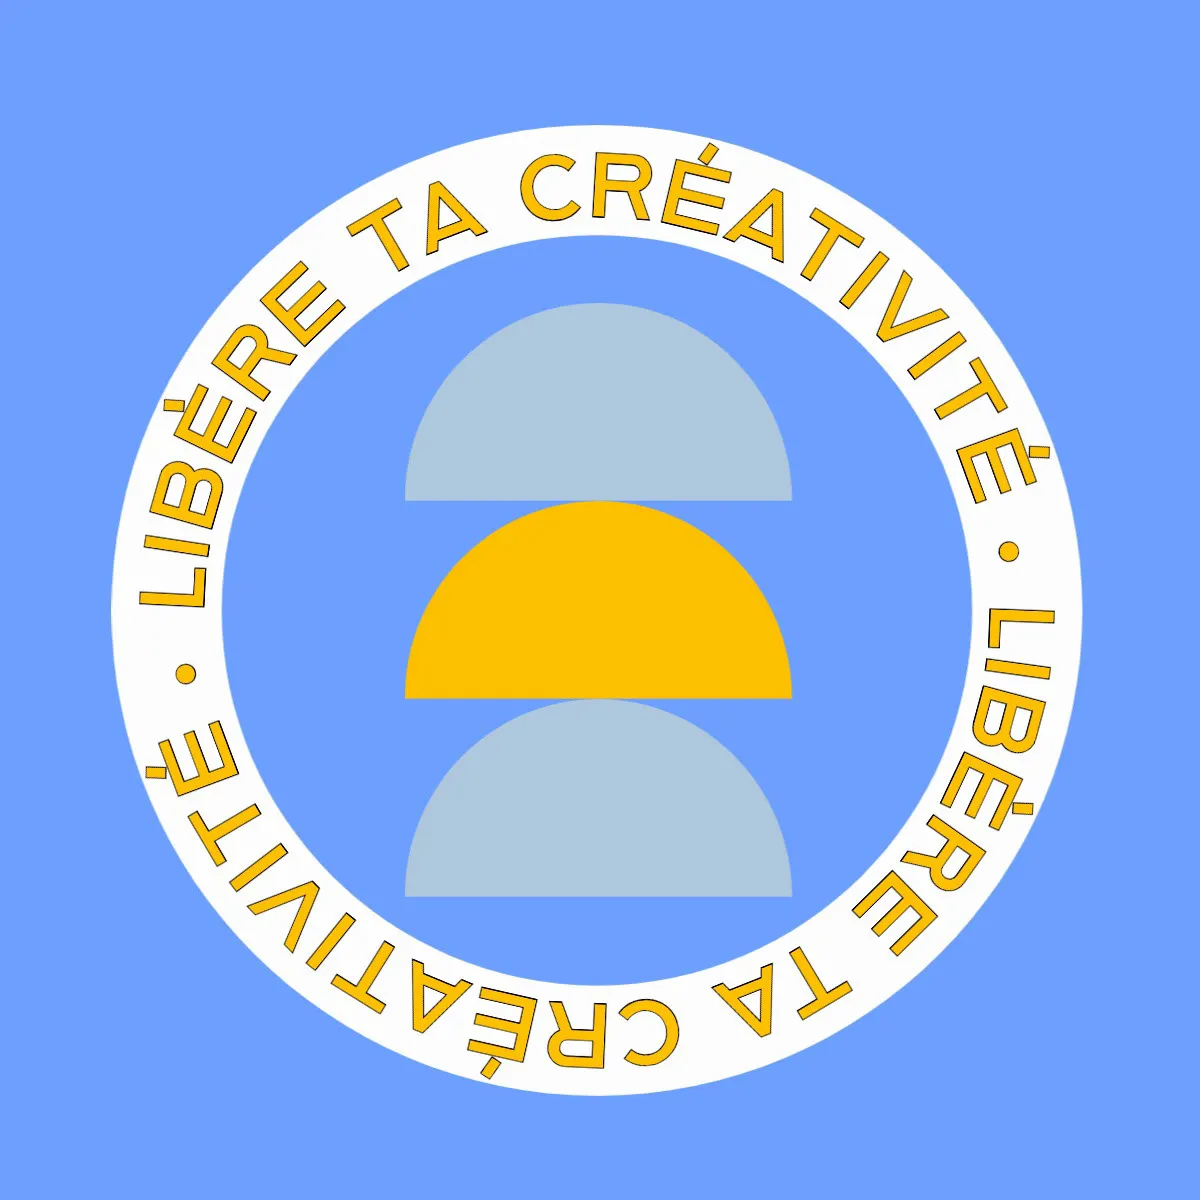 Blue and Yellow Creativity Sticker